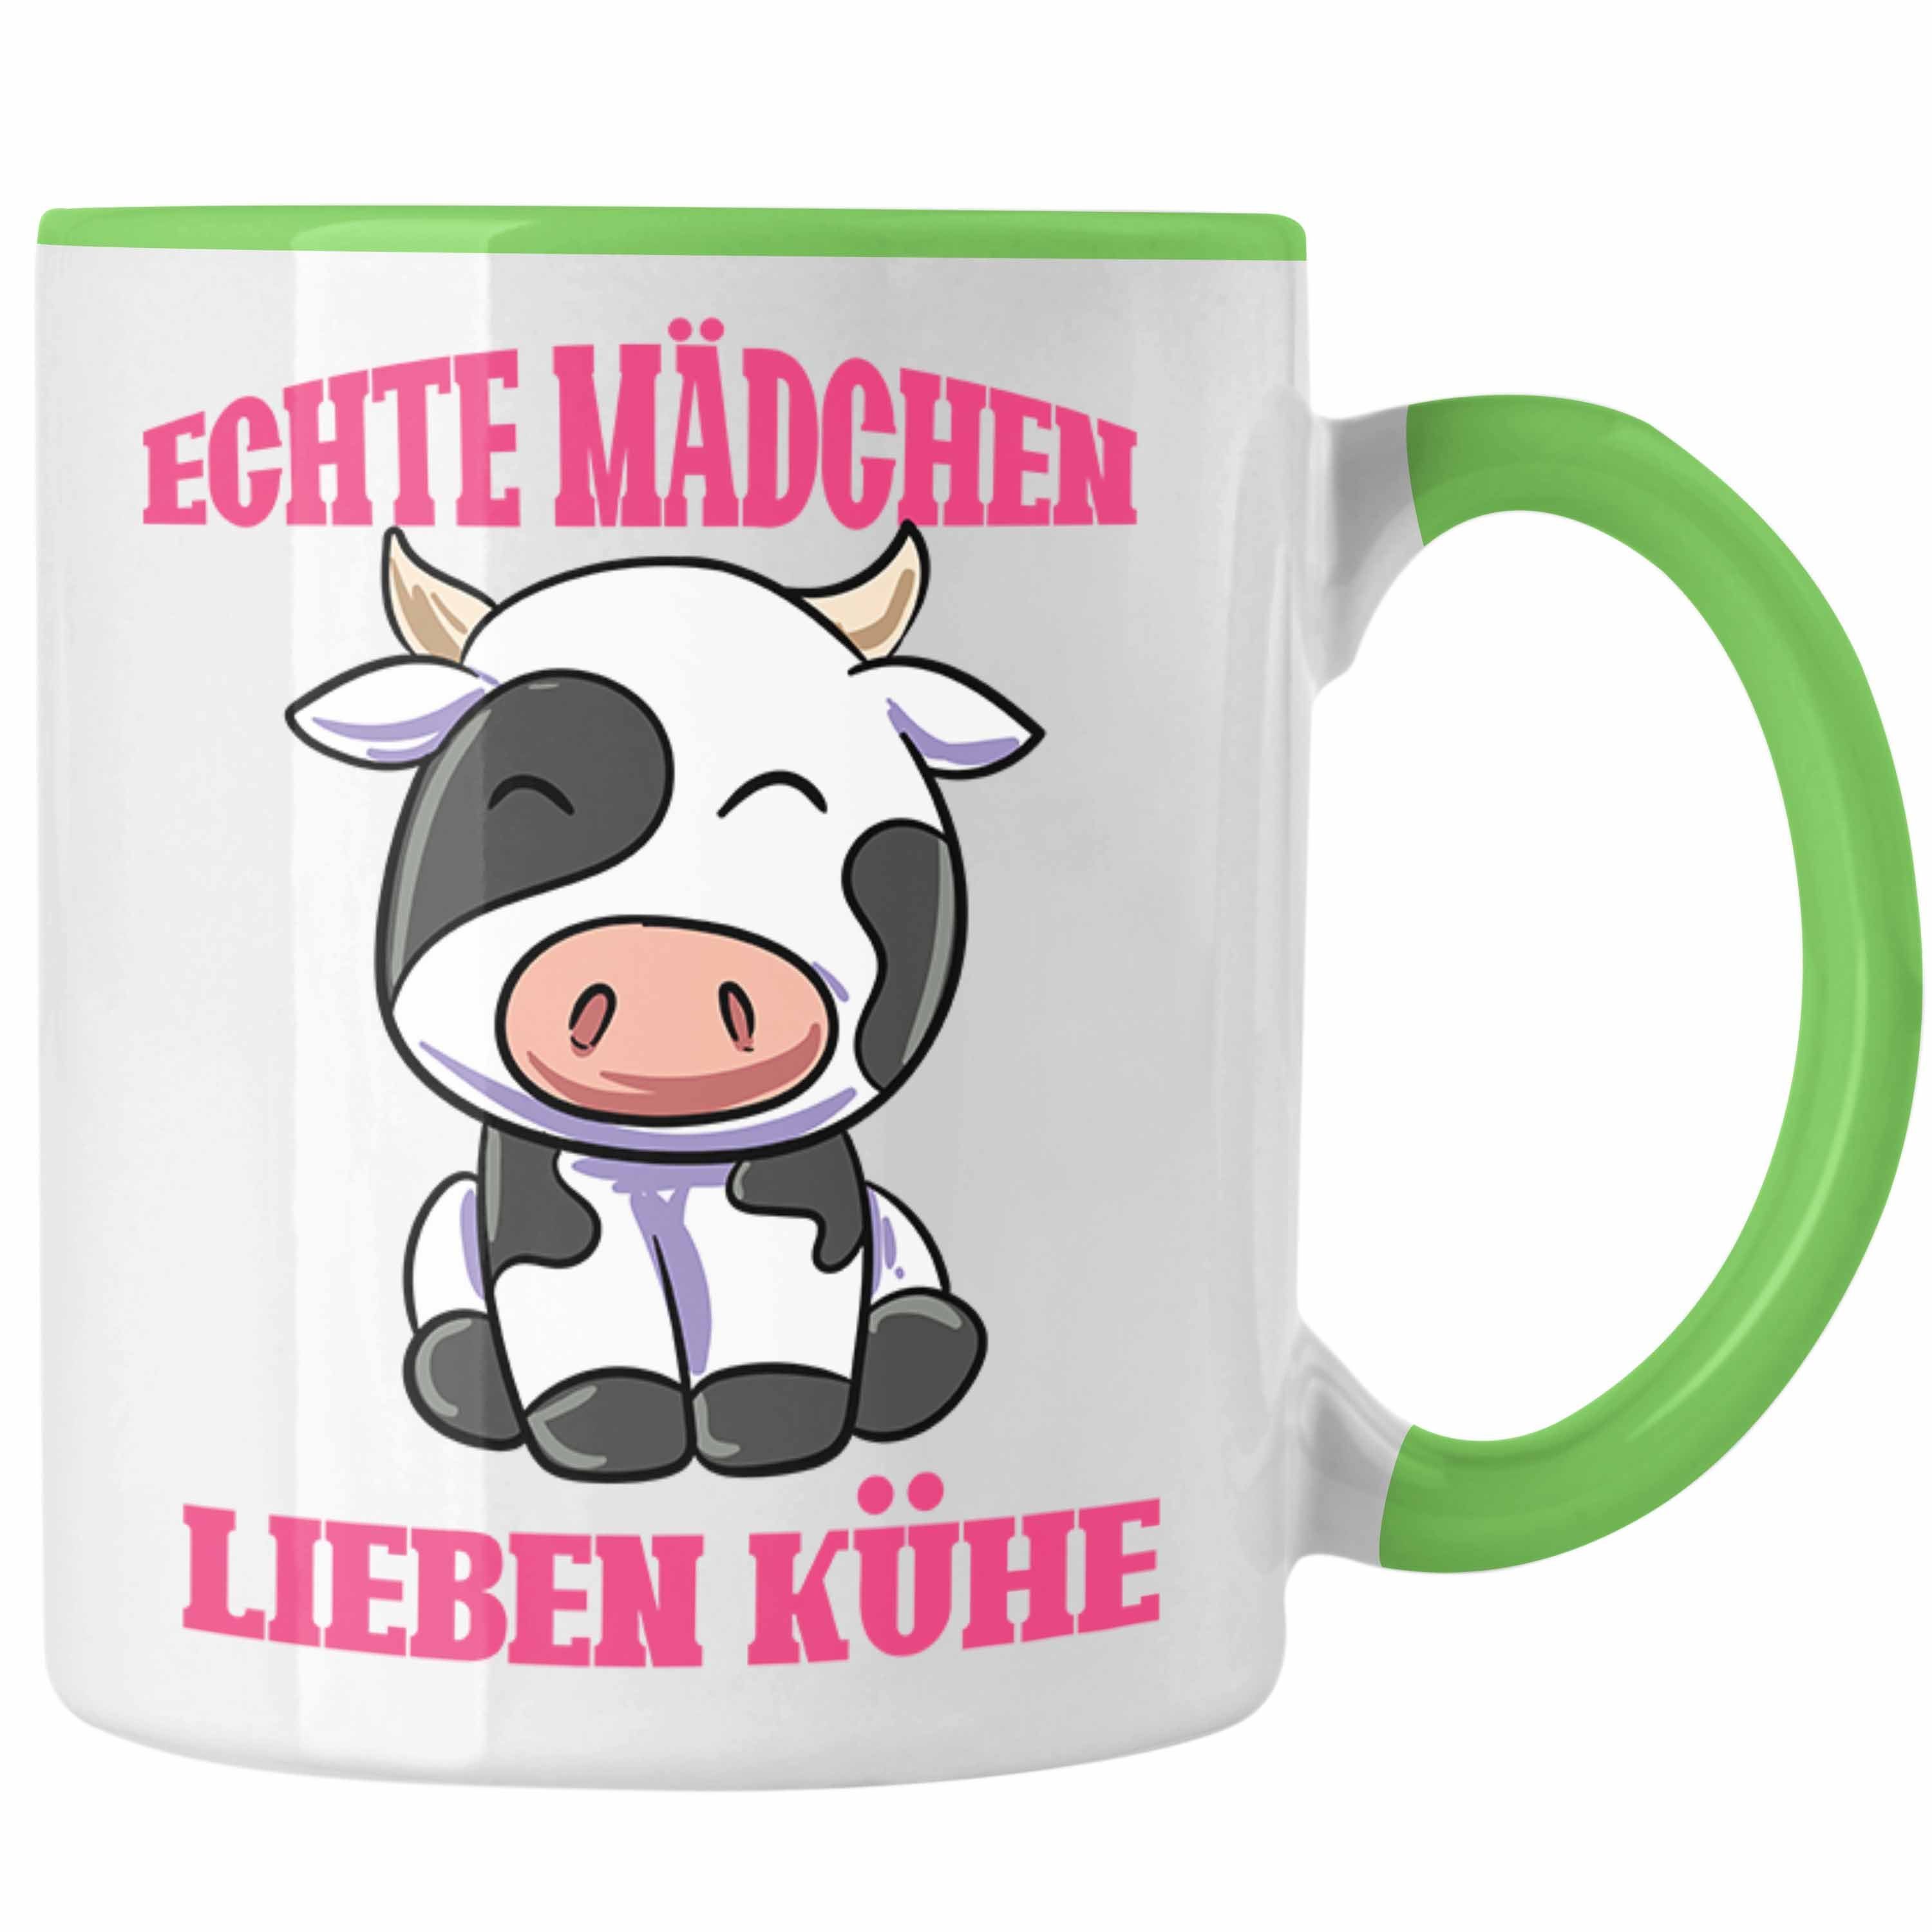 Trendation Tasse Kuh Bäuerin Geschenk Grün Lieben Tasse Gesch Landwirtin Kühe Mädchen Echte